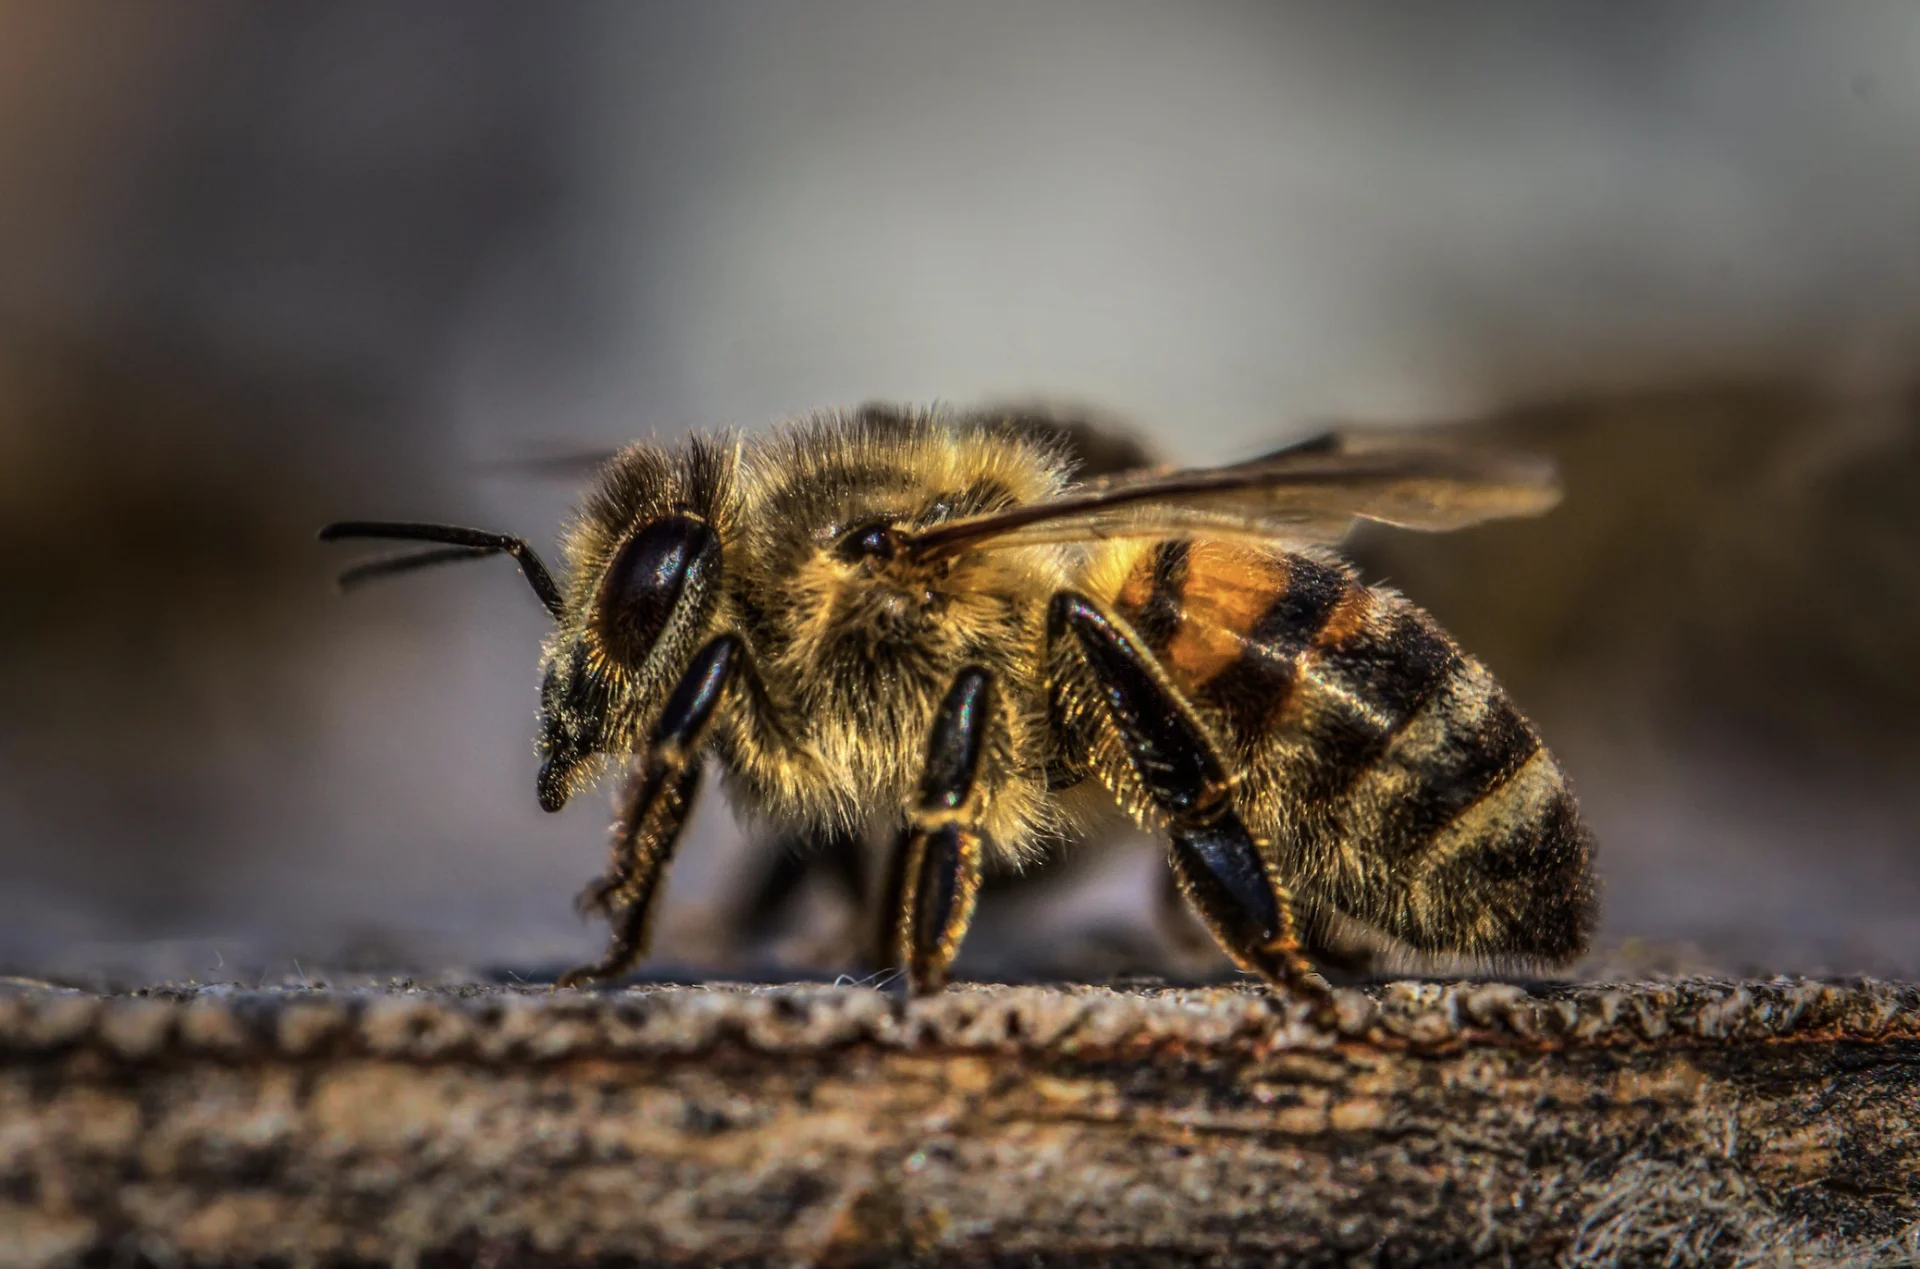 Pexels/David Hablützel: Honey bee on wood. Sachseln, OW, Switzerland. Link: https://www.pexels.com/photo/honey-bee-on-wood-1035224/